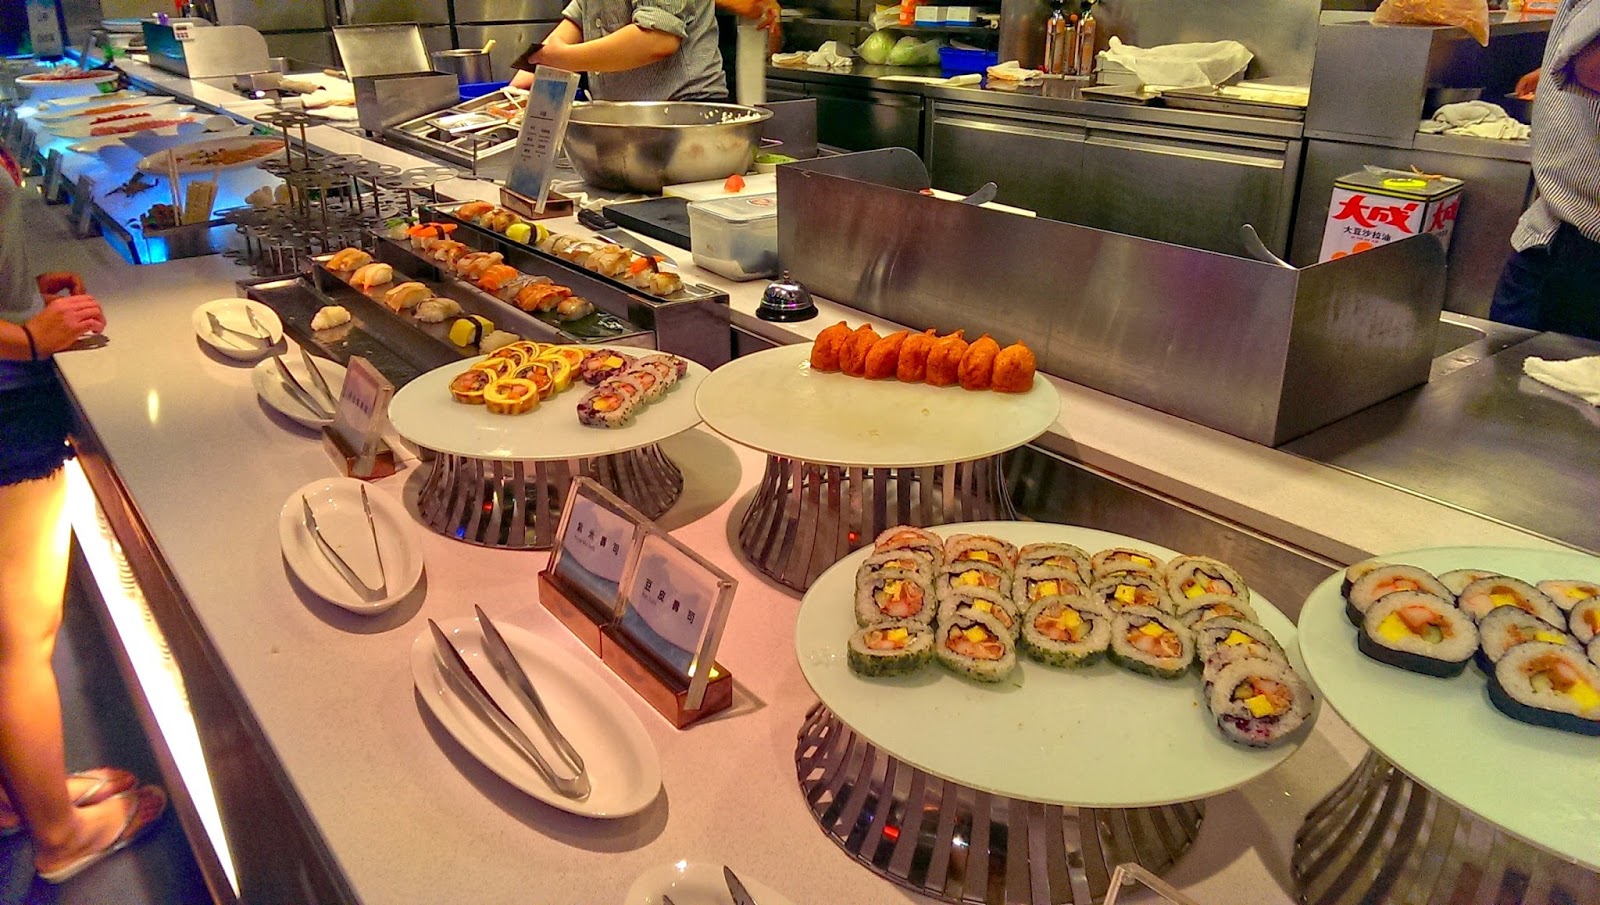 2015 07 01%2B19.15.13 - [食記] 台北京站 - 饗食天堂，有生魚片吃到飽的高級自助餐廳！